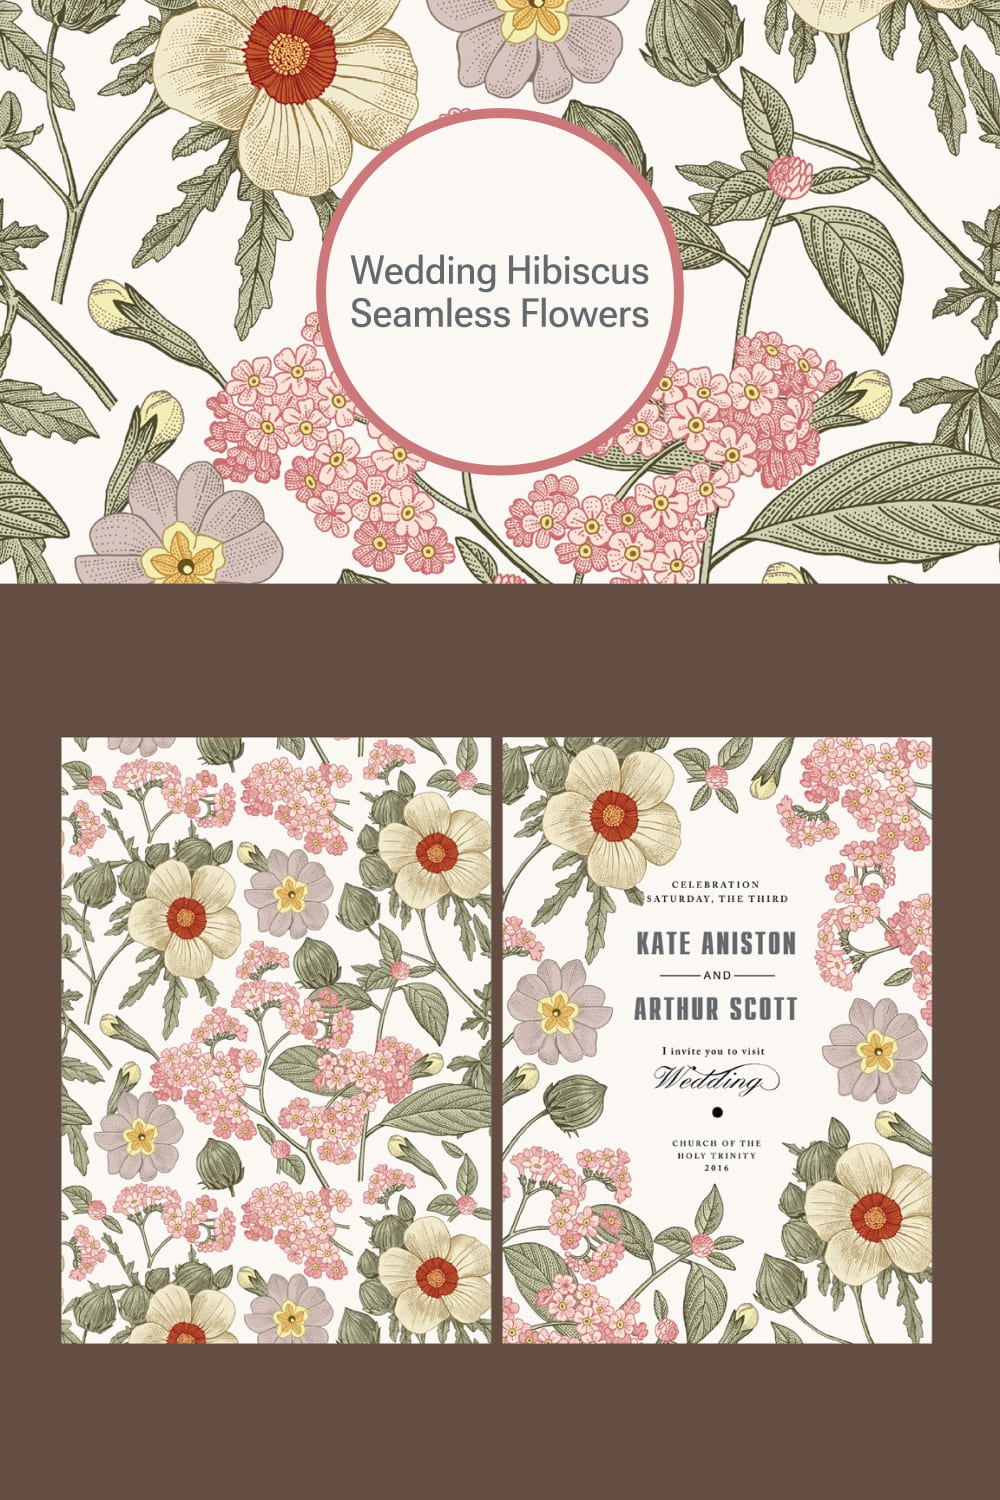 Wedding Hibiscus Seamless Flowers pinterest image.